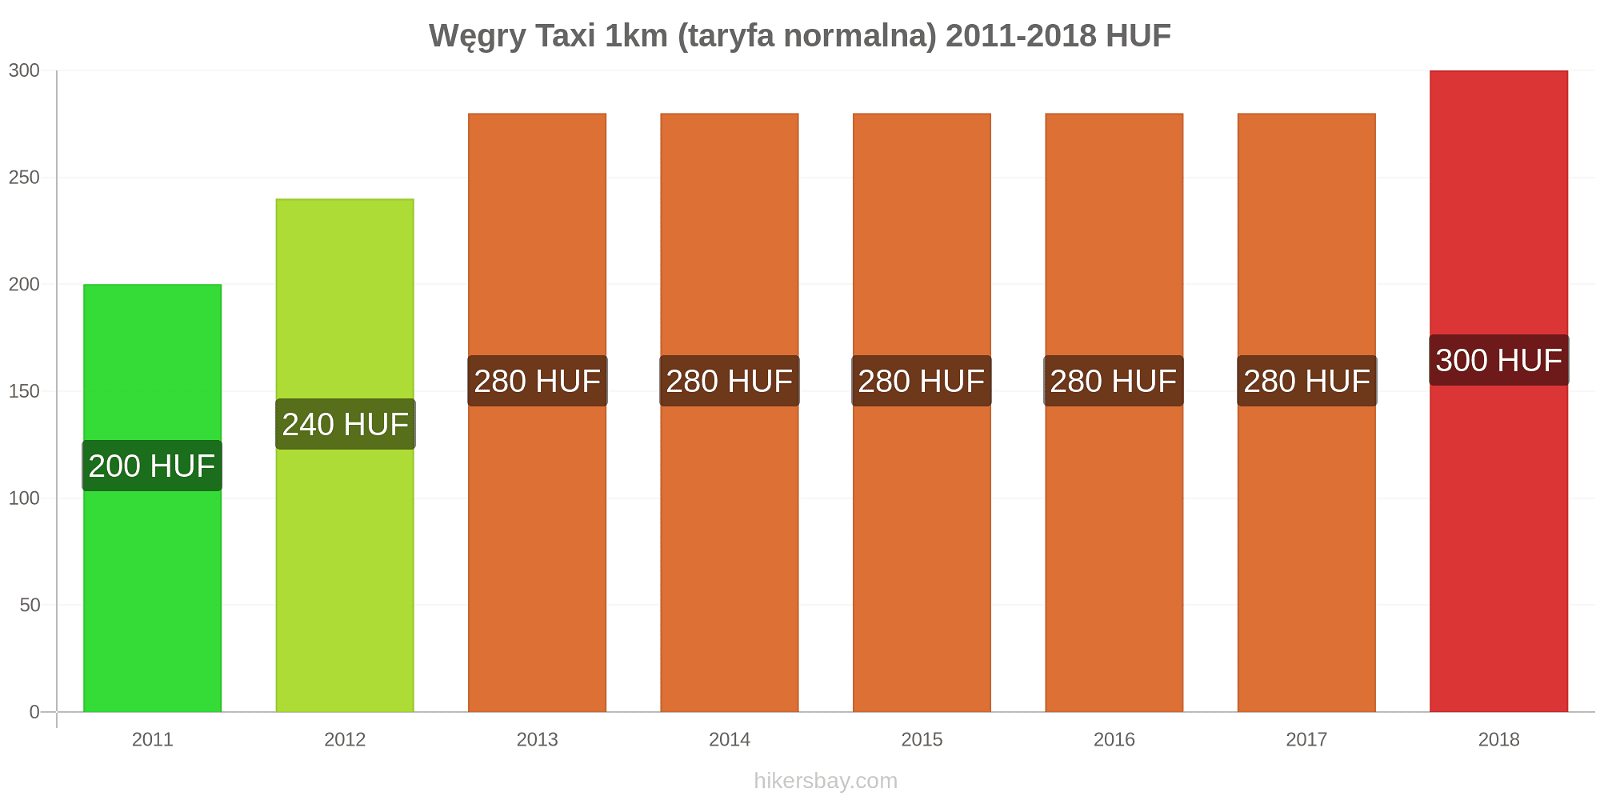 Węgry zmiany cen Taxi 1km (taryfa normalna) hikersbay.com